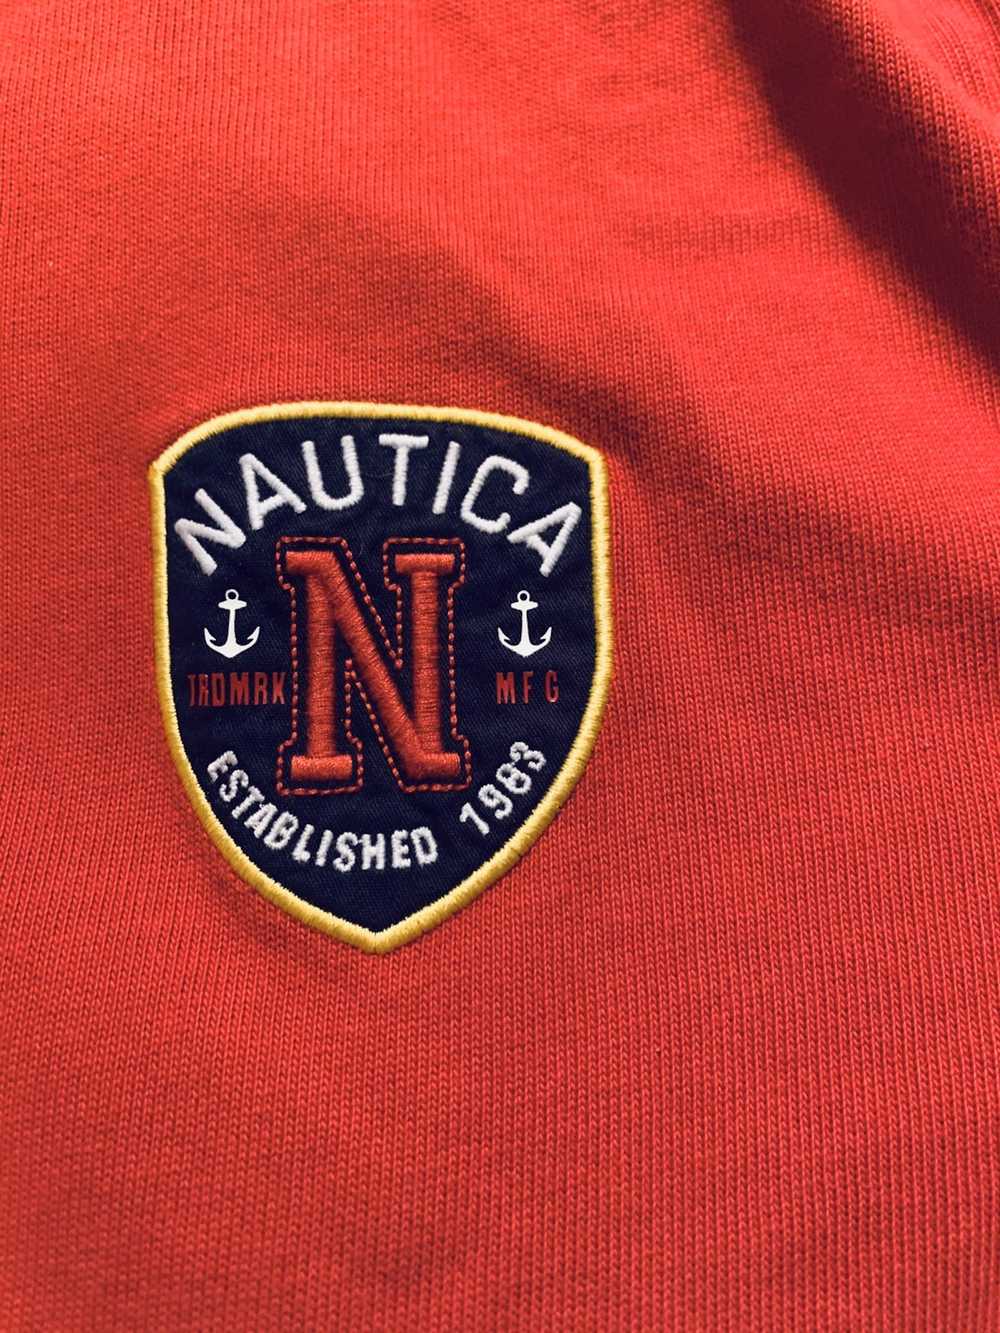 Nautica Nautica Sailing Gear Vintage Sweatshirt - image 3